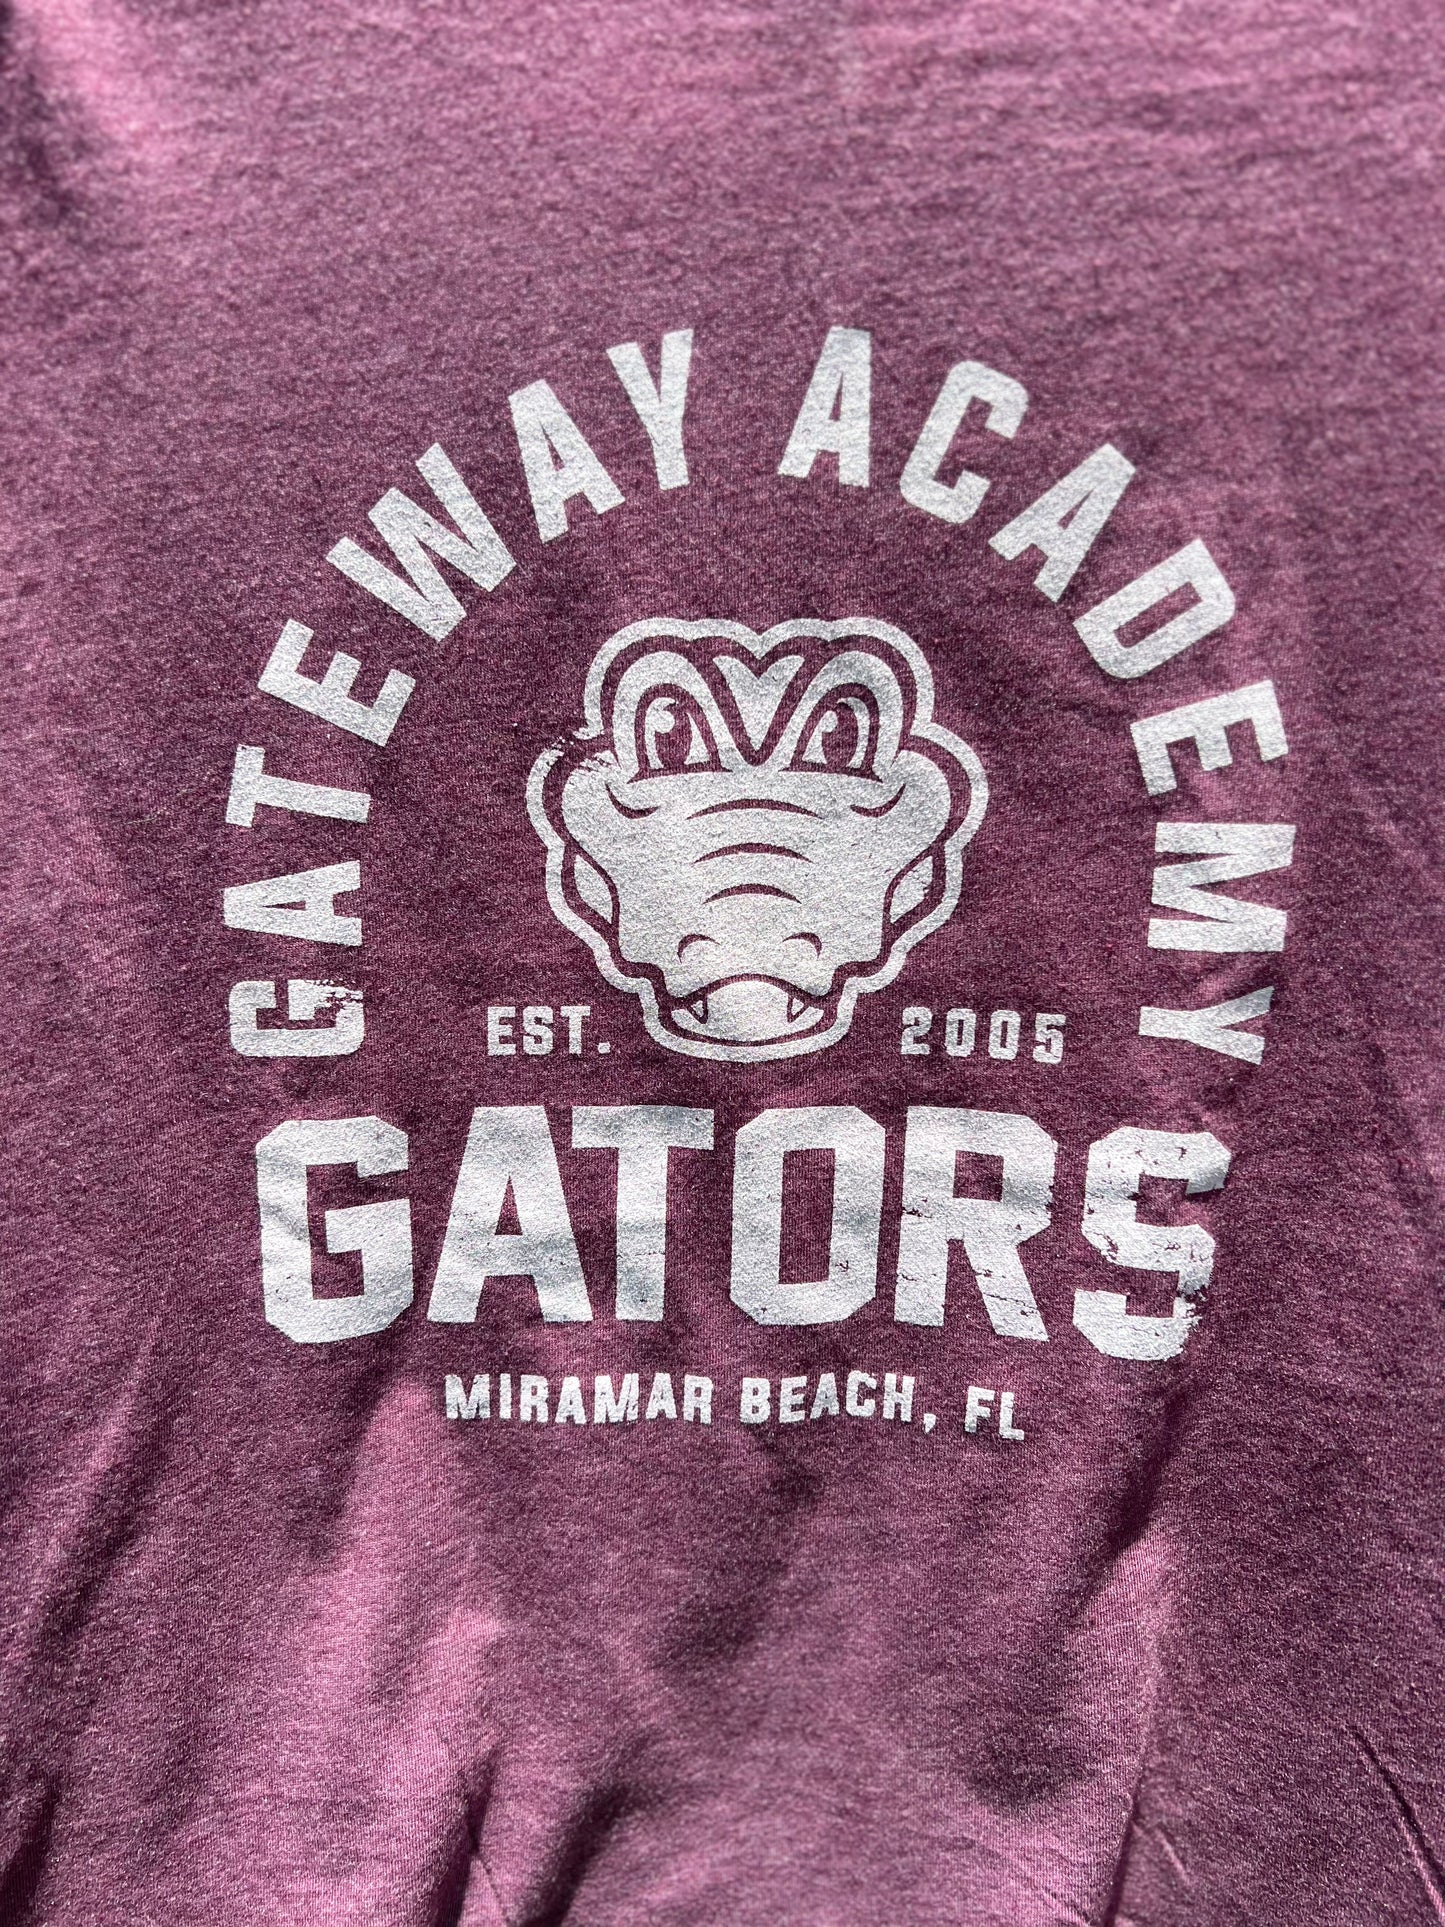 Gateway Gator T-shirt